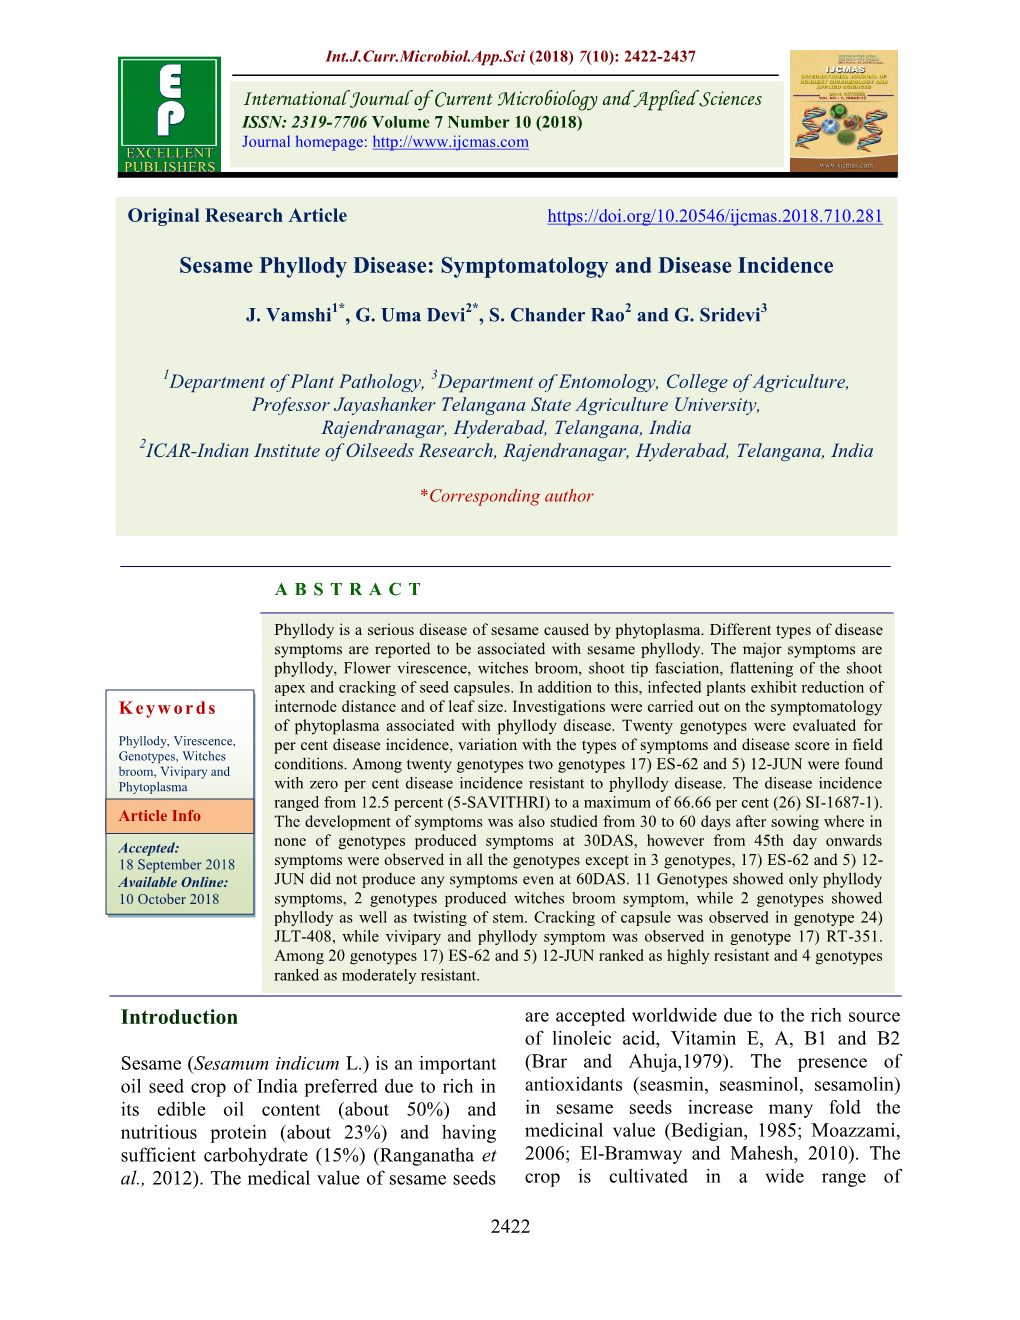 Sesame Phyllody Disease: Symptomatology and Disease Incidence